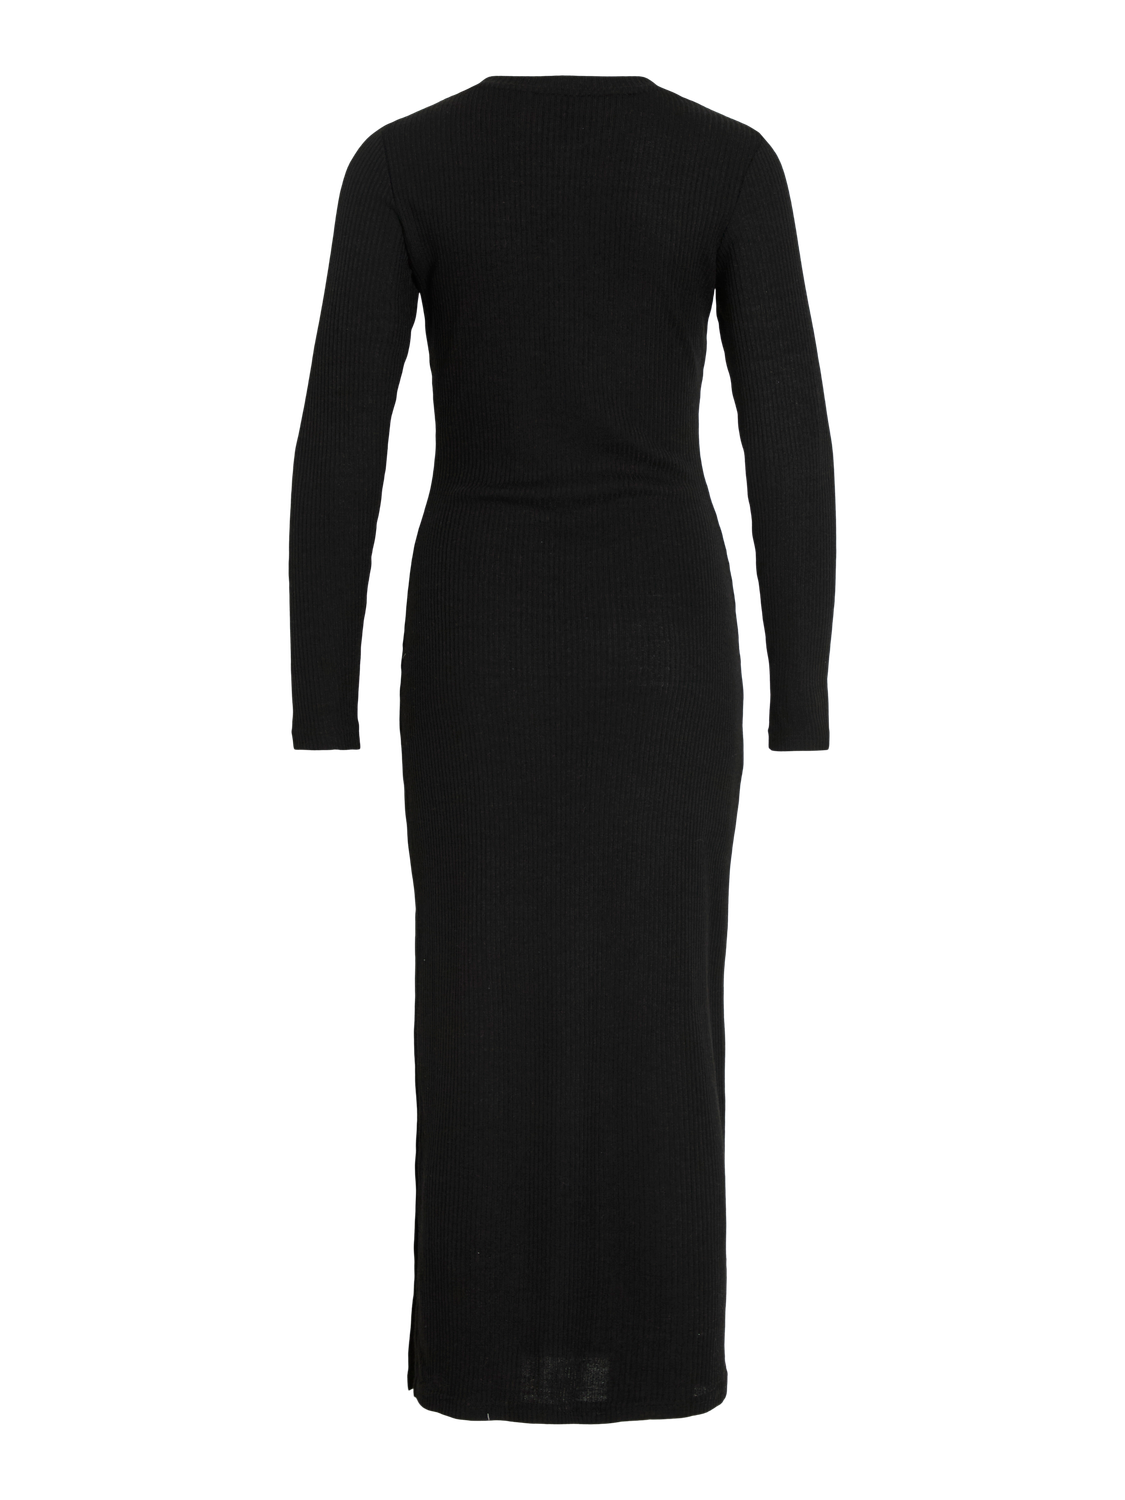 VIMADDIE Dress - Black